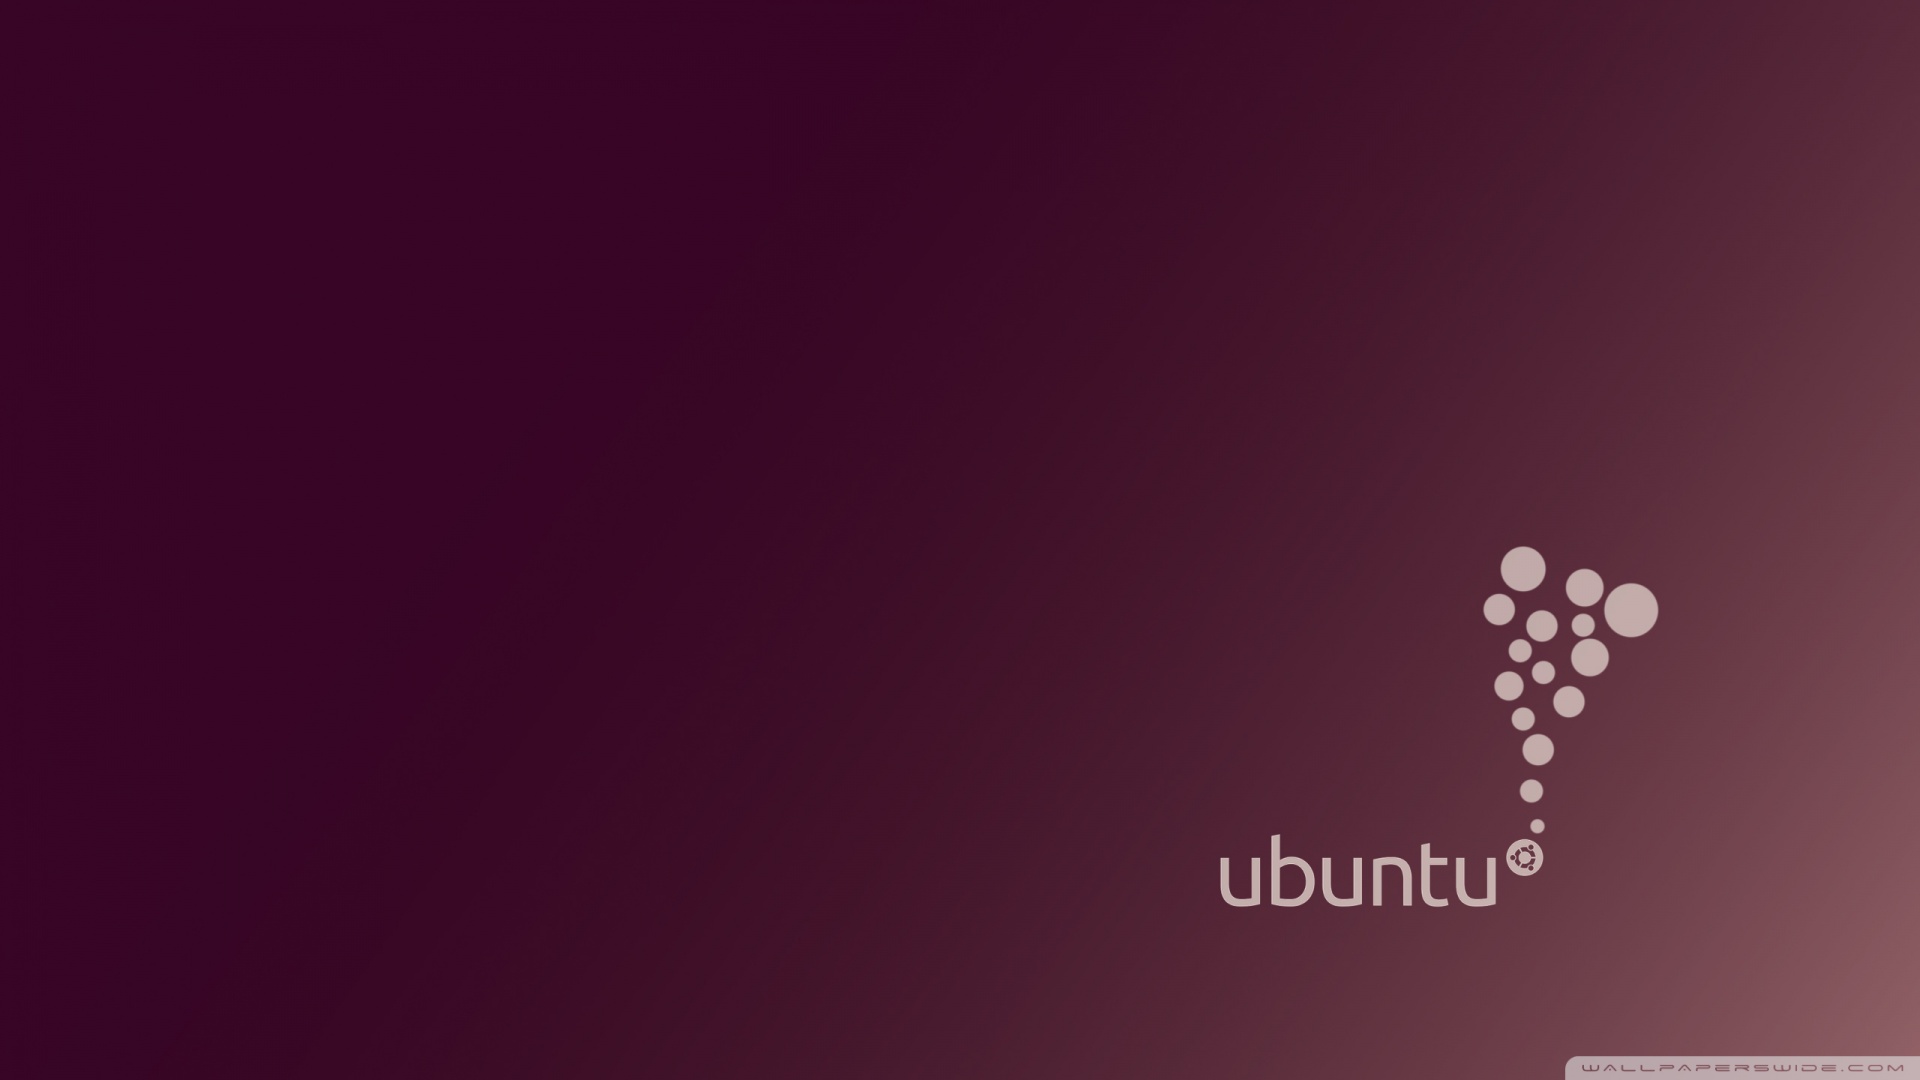 Ubuntu Linux Wallpaper Image